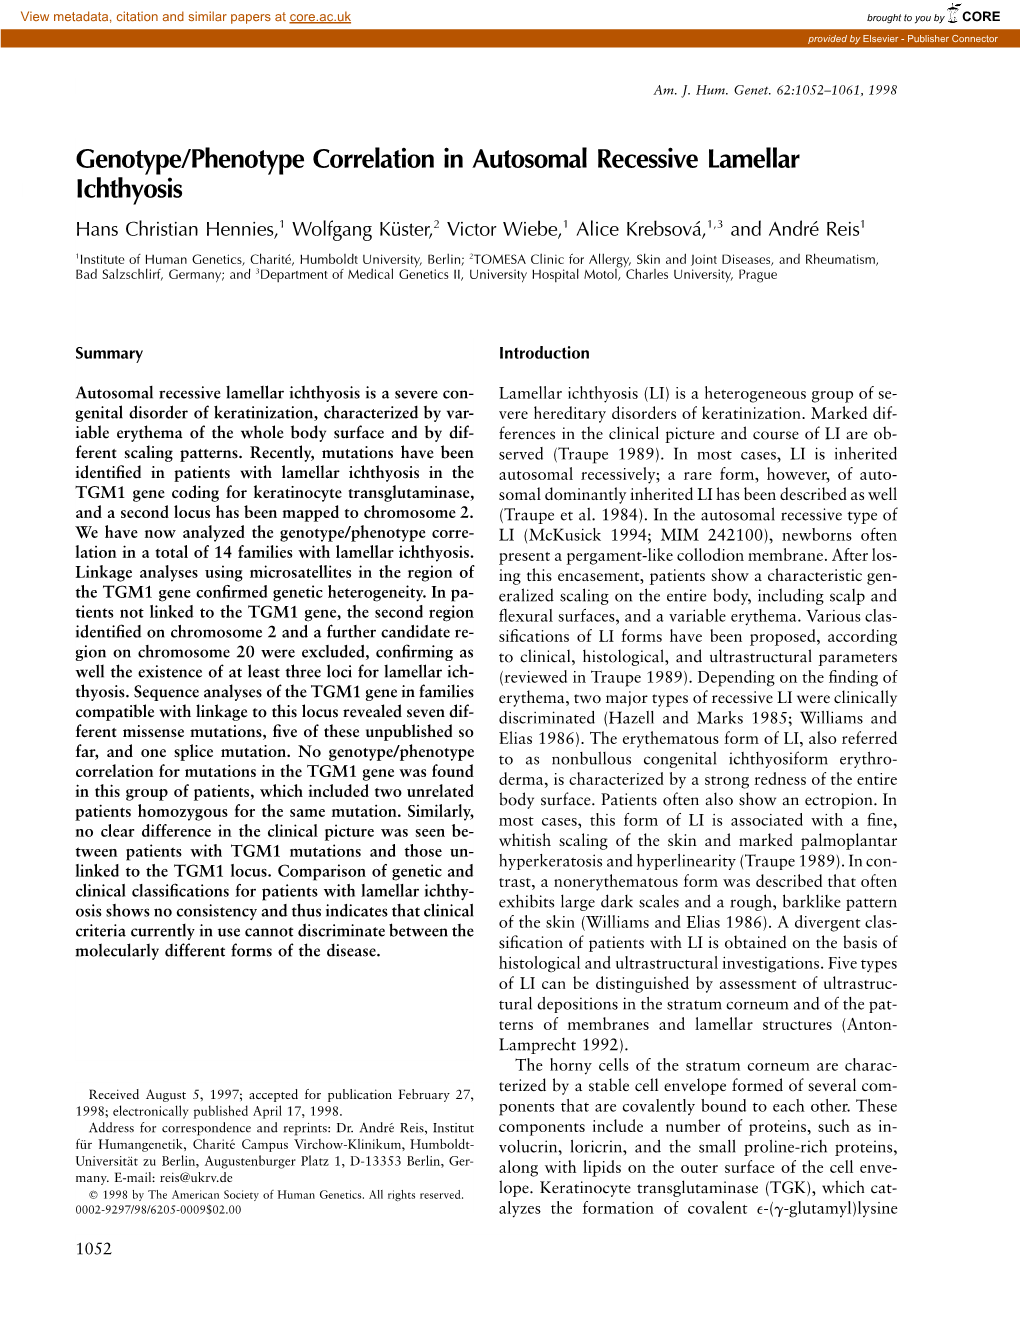 Genotype/Phenotype Correlation in Autosomal Recessive Lamellar